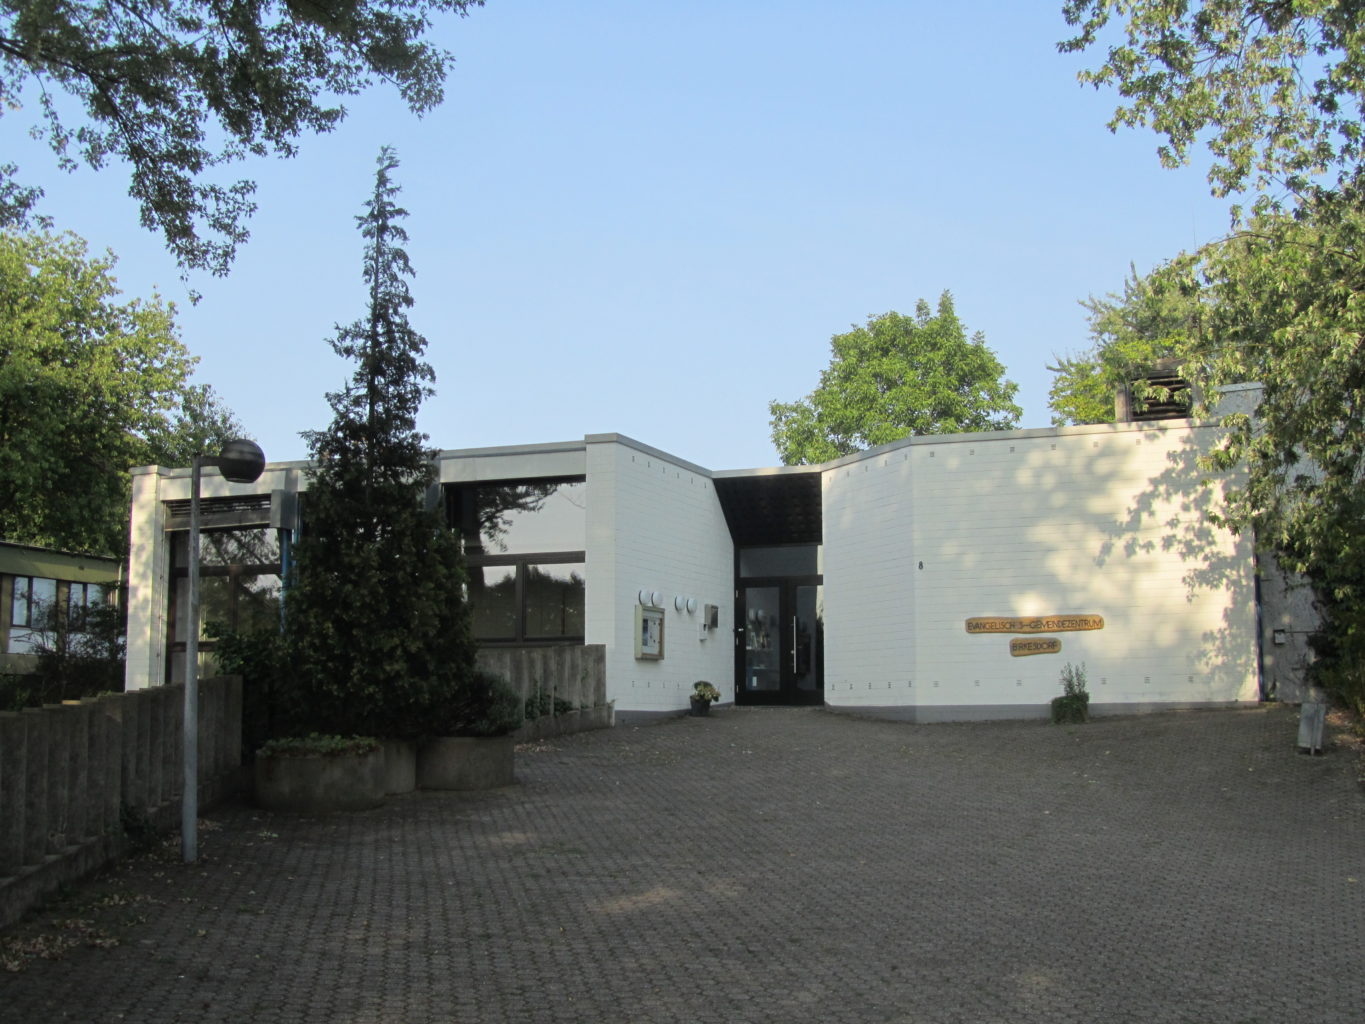 Evangelisches Gemeindezentrum in Birkesdorf